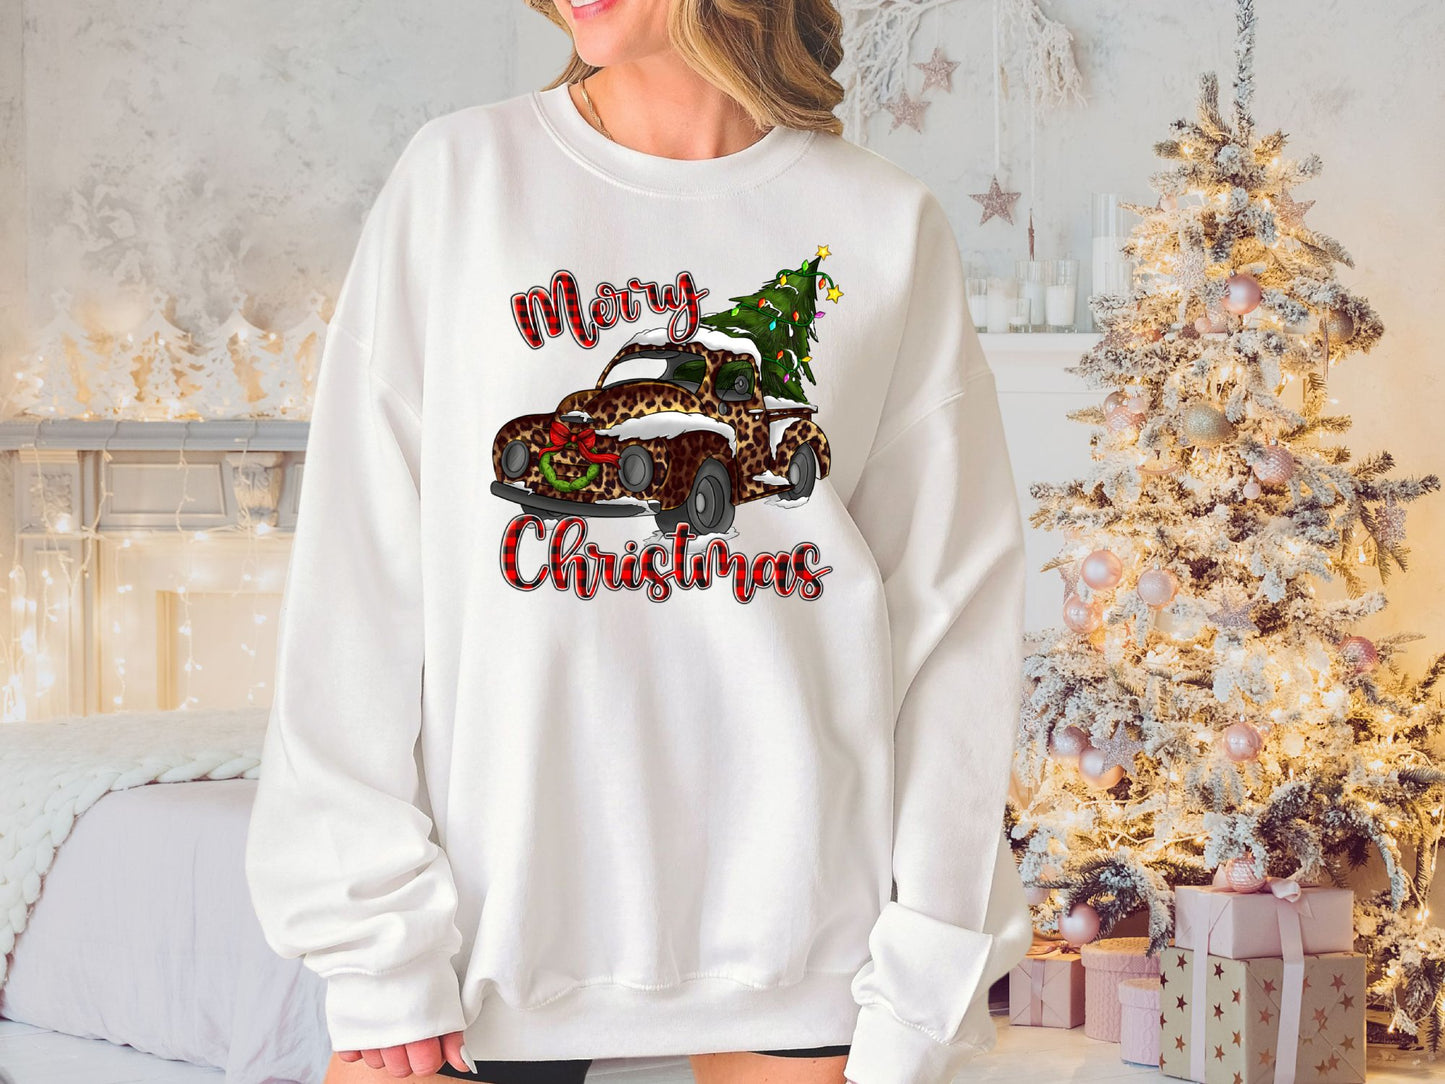 Merry Christmas Leopard Print Truck Sweatshirt, Christmas Sweater for Women, Christmas Gift for Women, Holiday Sweater, Xmas Shirt - Mardonyx Sweatshirt